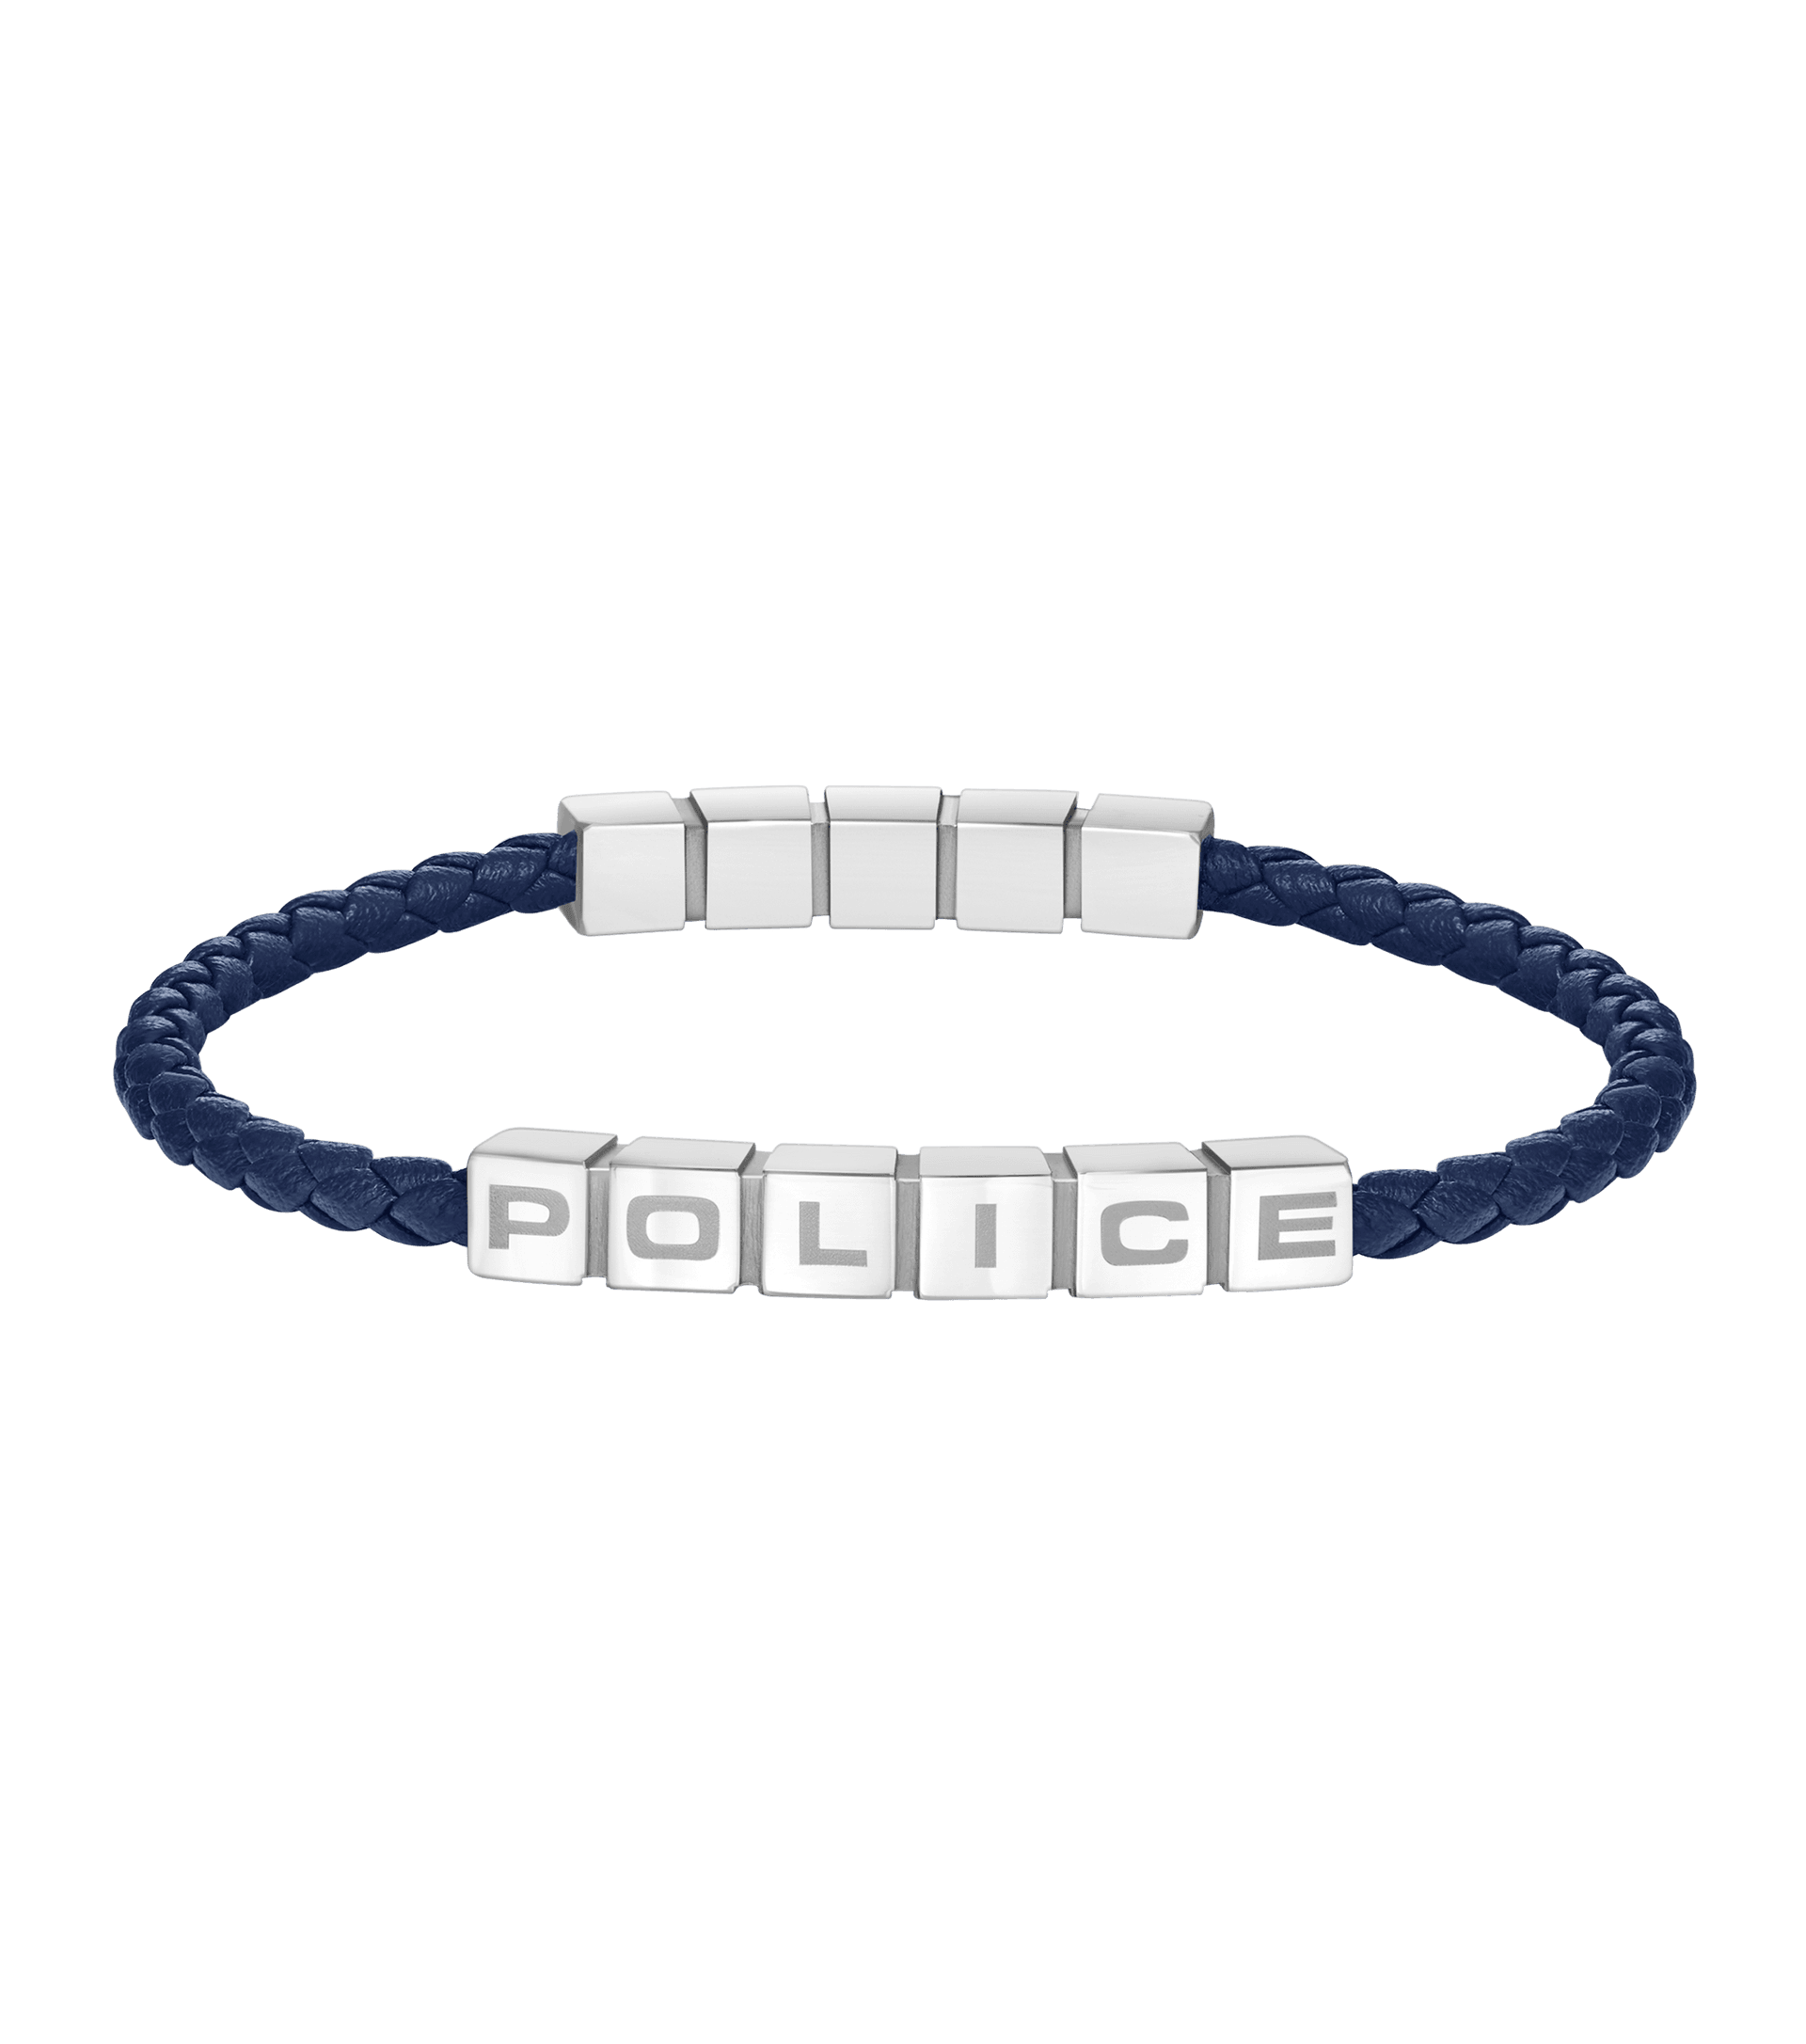 Police - For Men Mail PEJGB2112601 Police Bracelet By Chain jewels